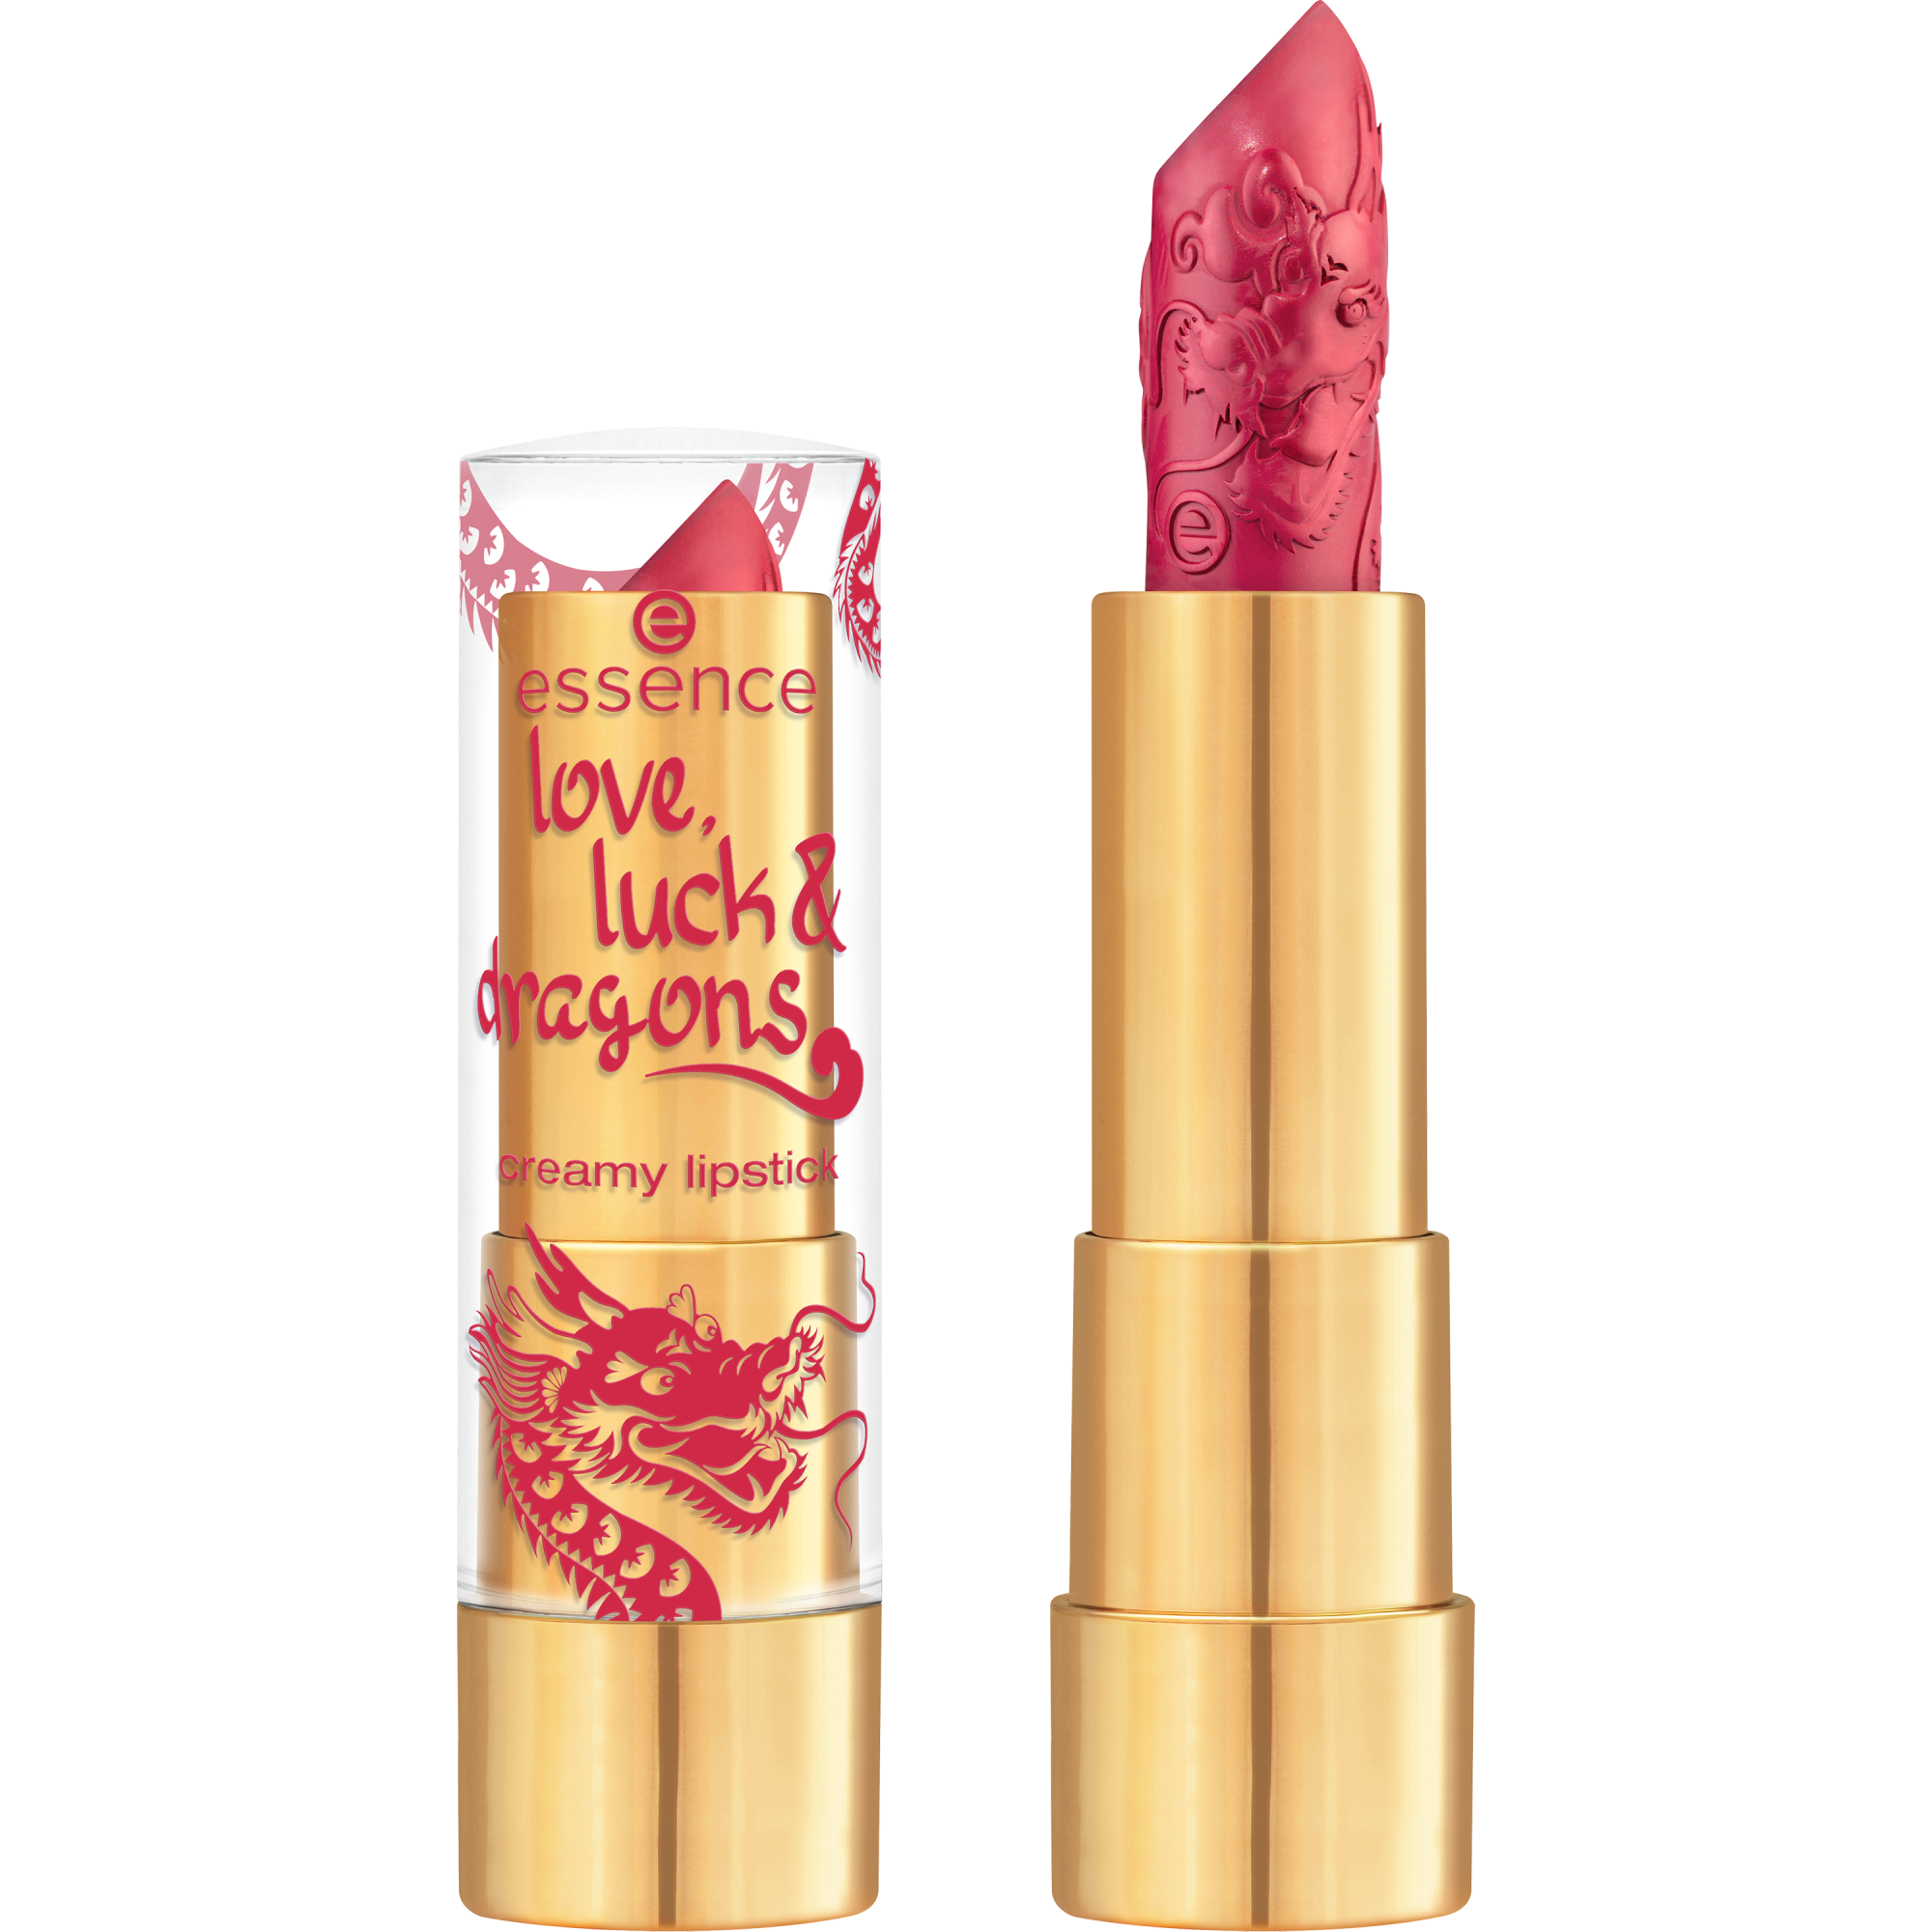 love, luck & dragons creamy lipstick